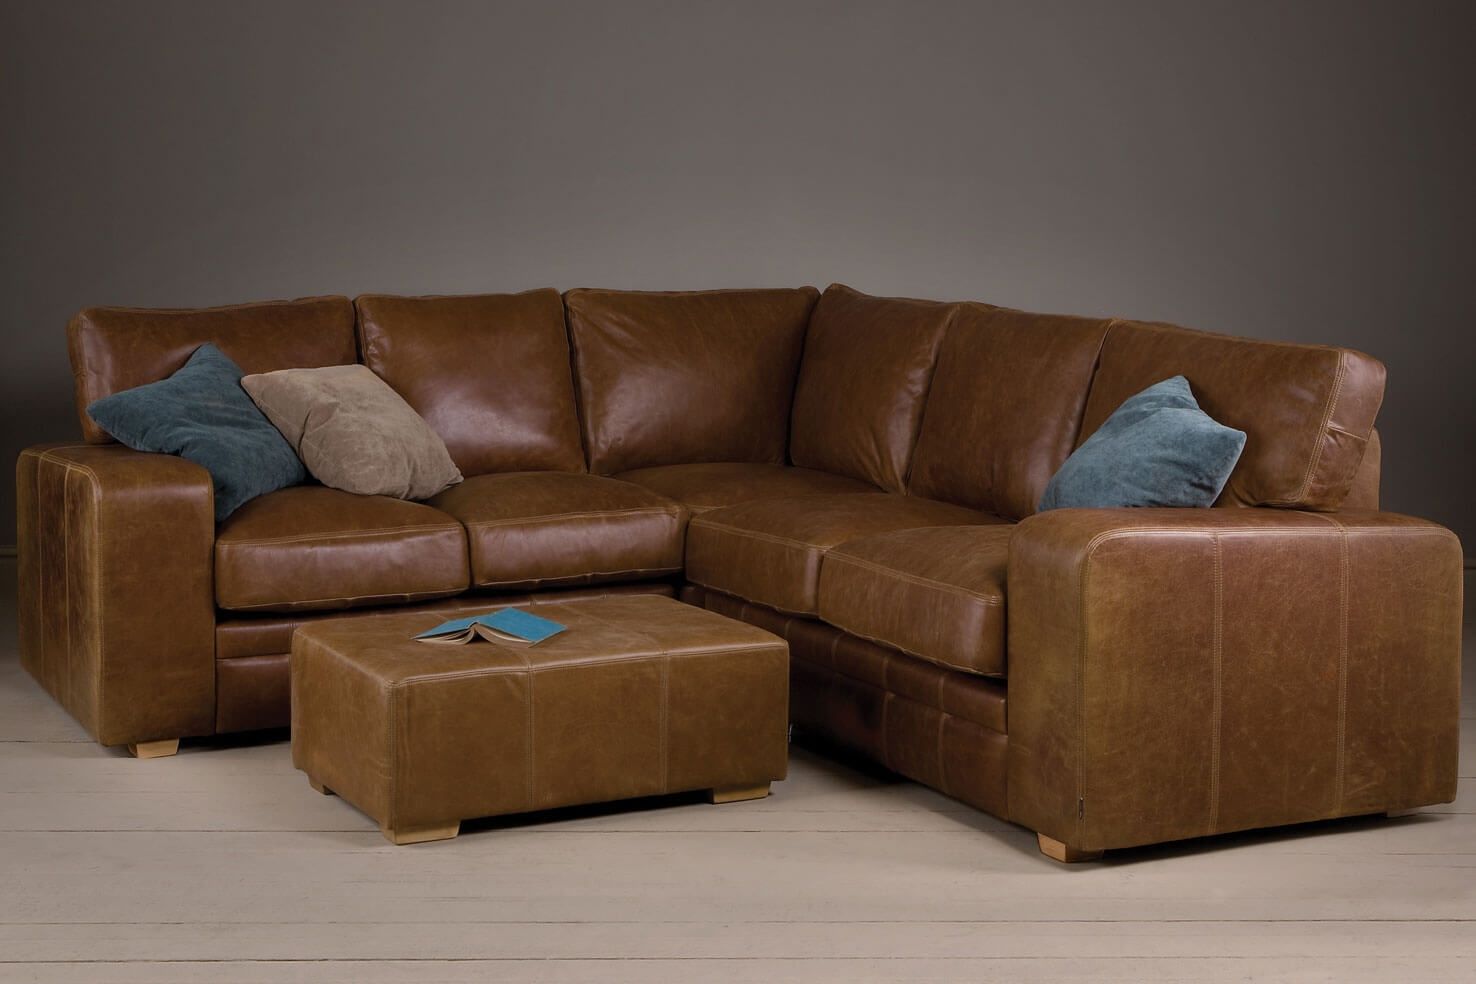 The Broad Arm Leather Corner Sofa by Indigo Furniture